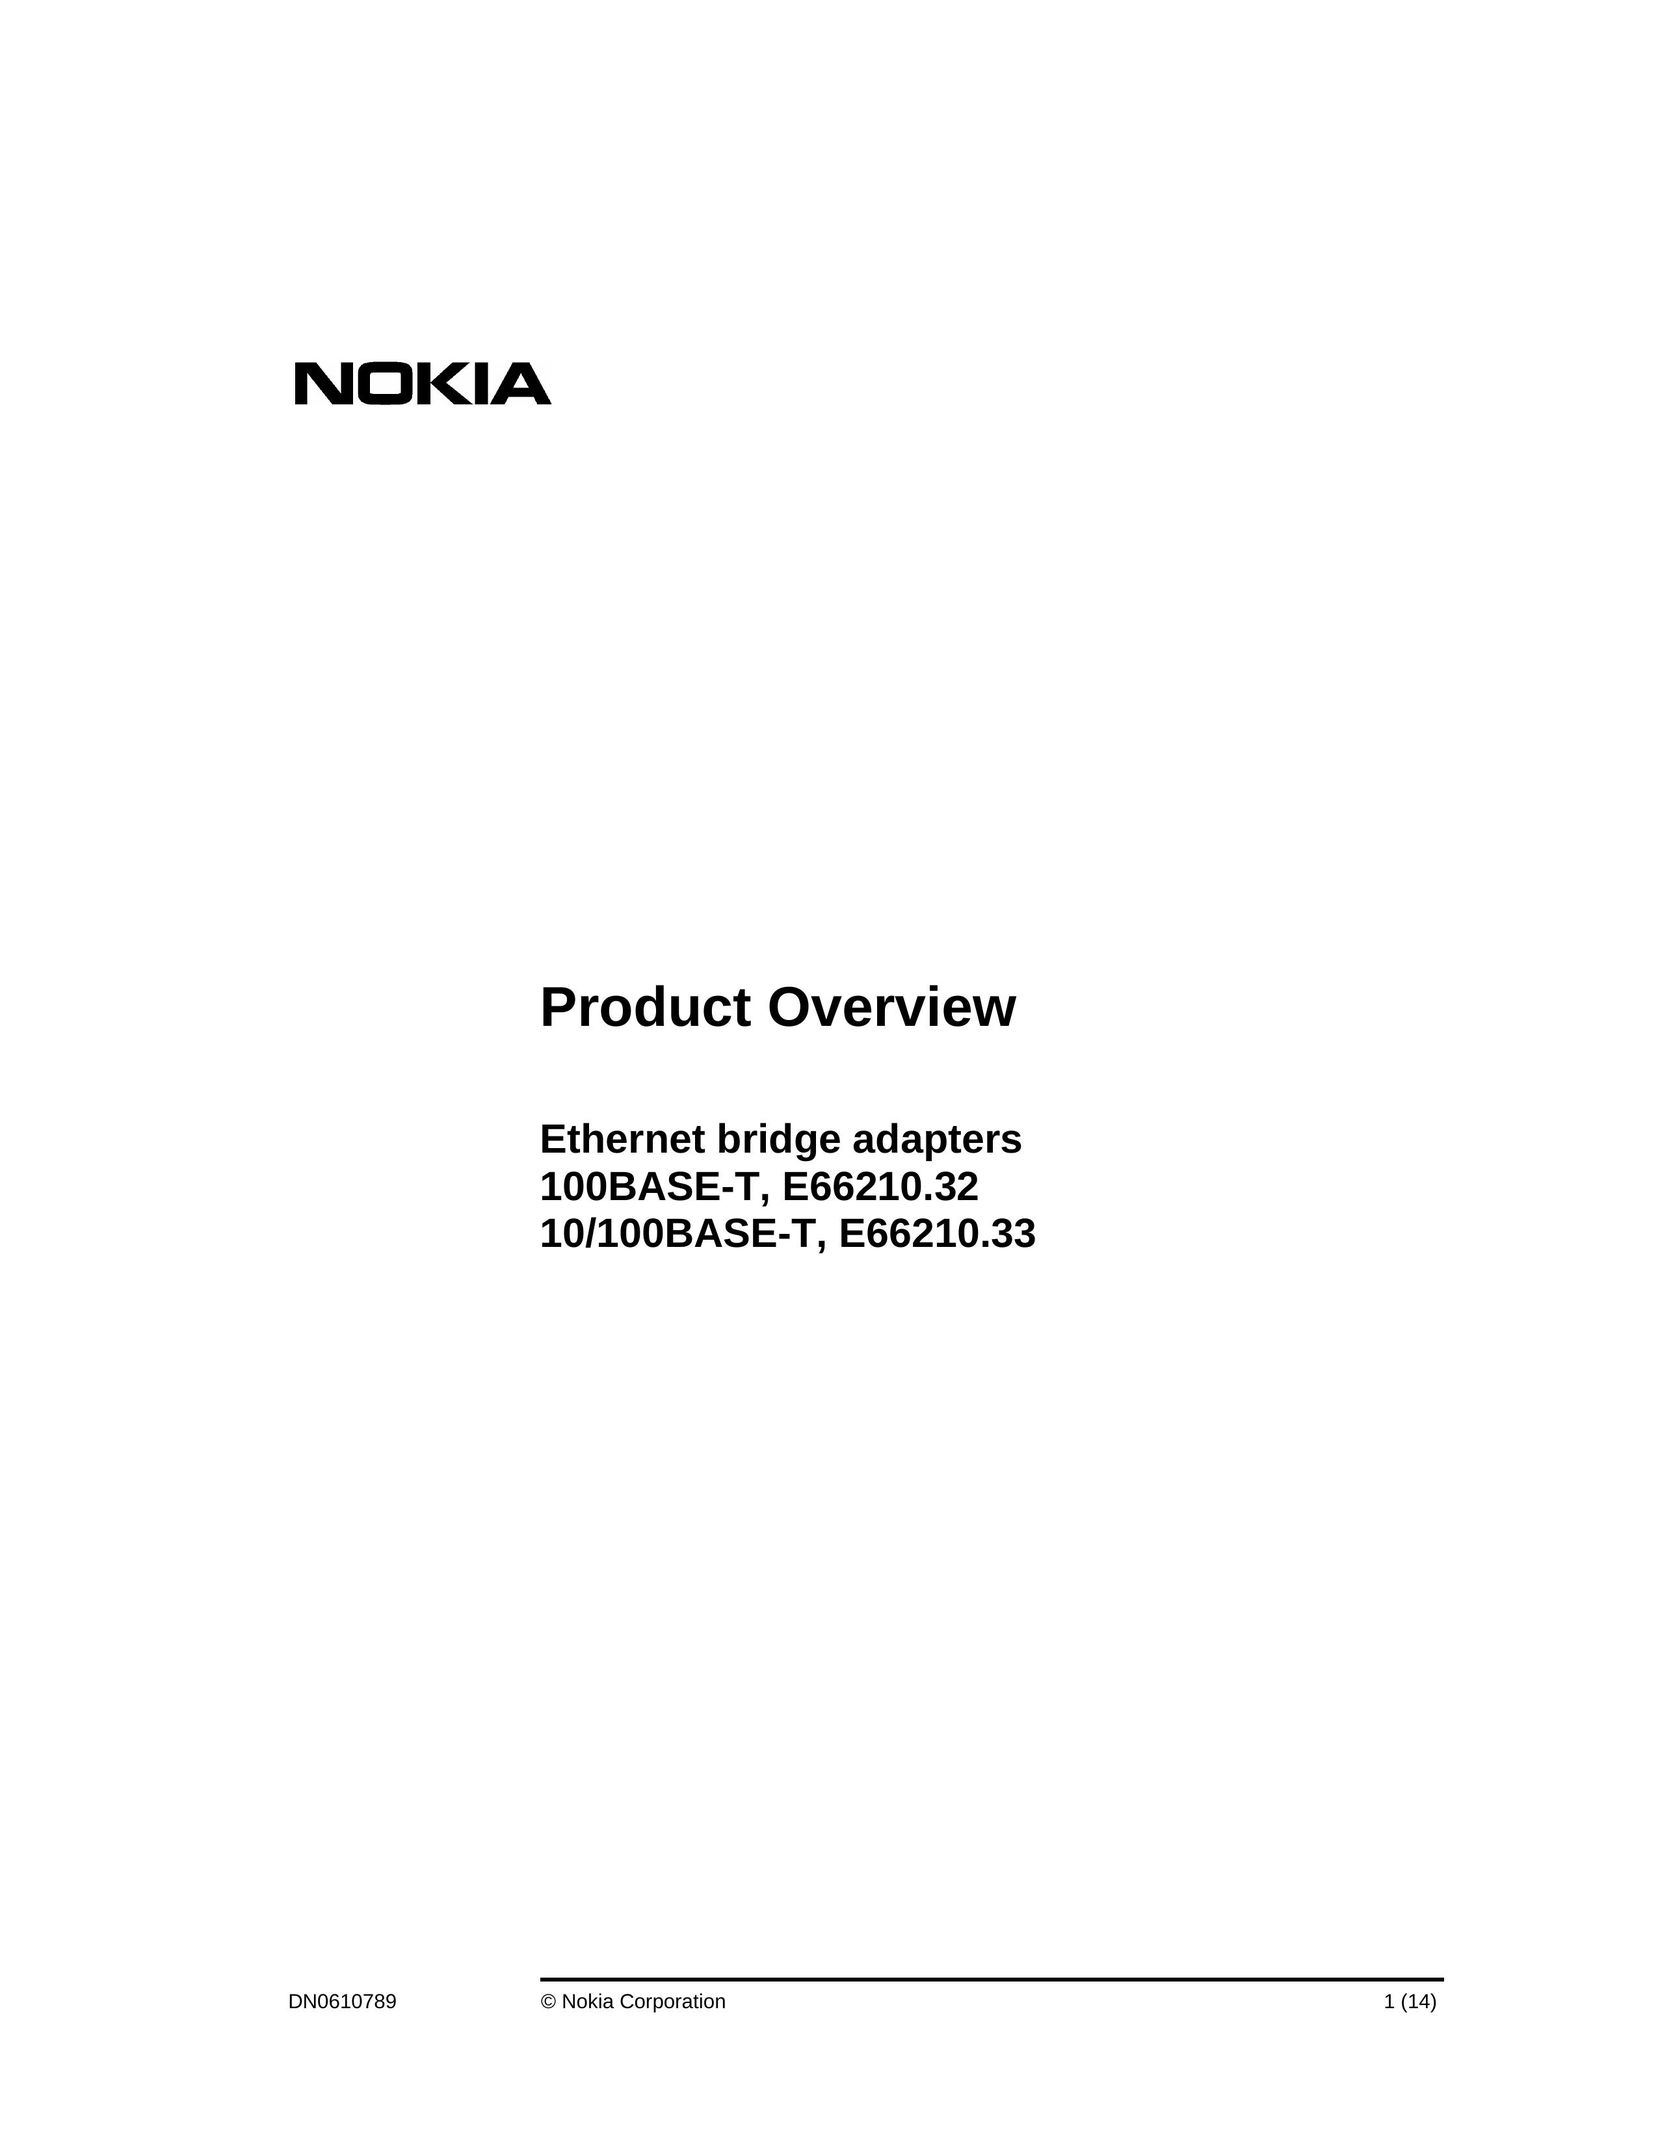 Nokia 100BASE-T Switch User Manual